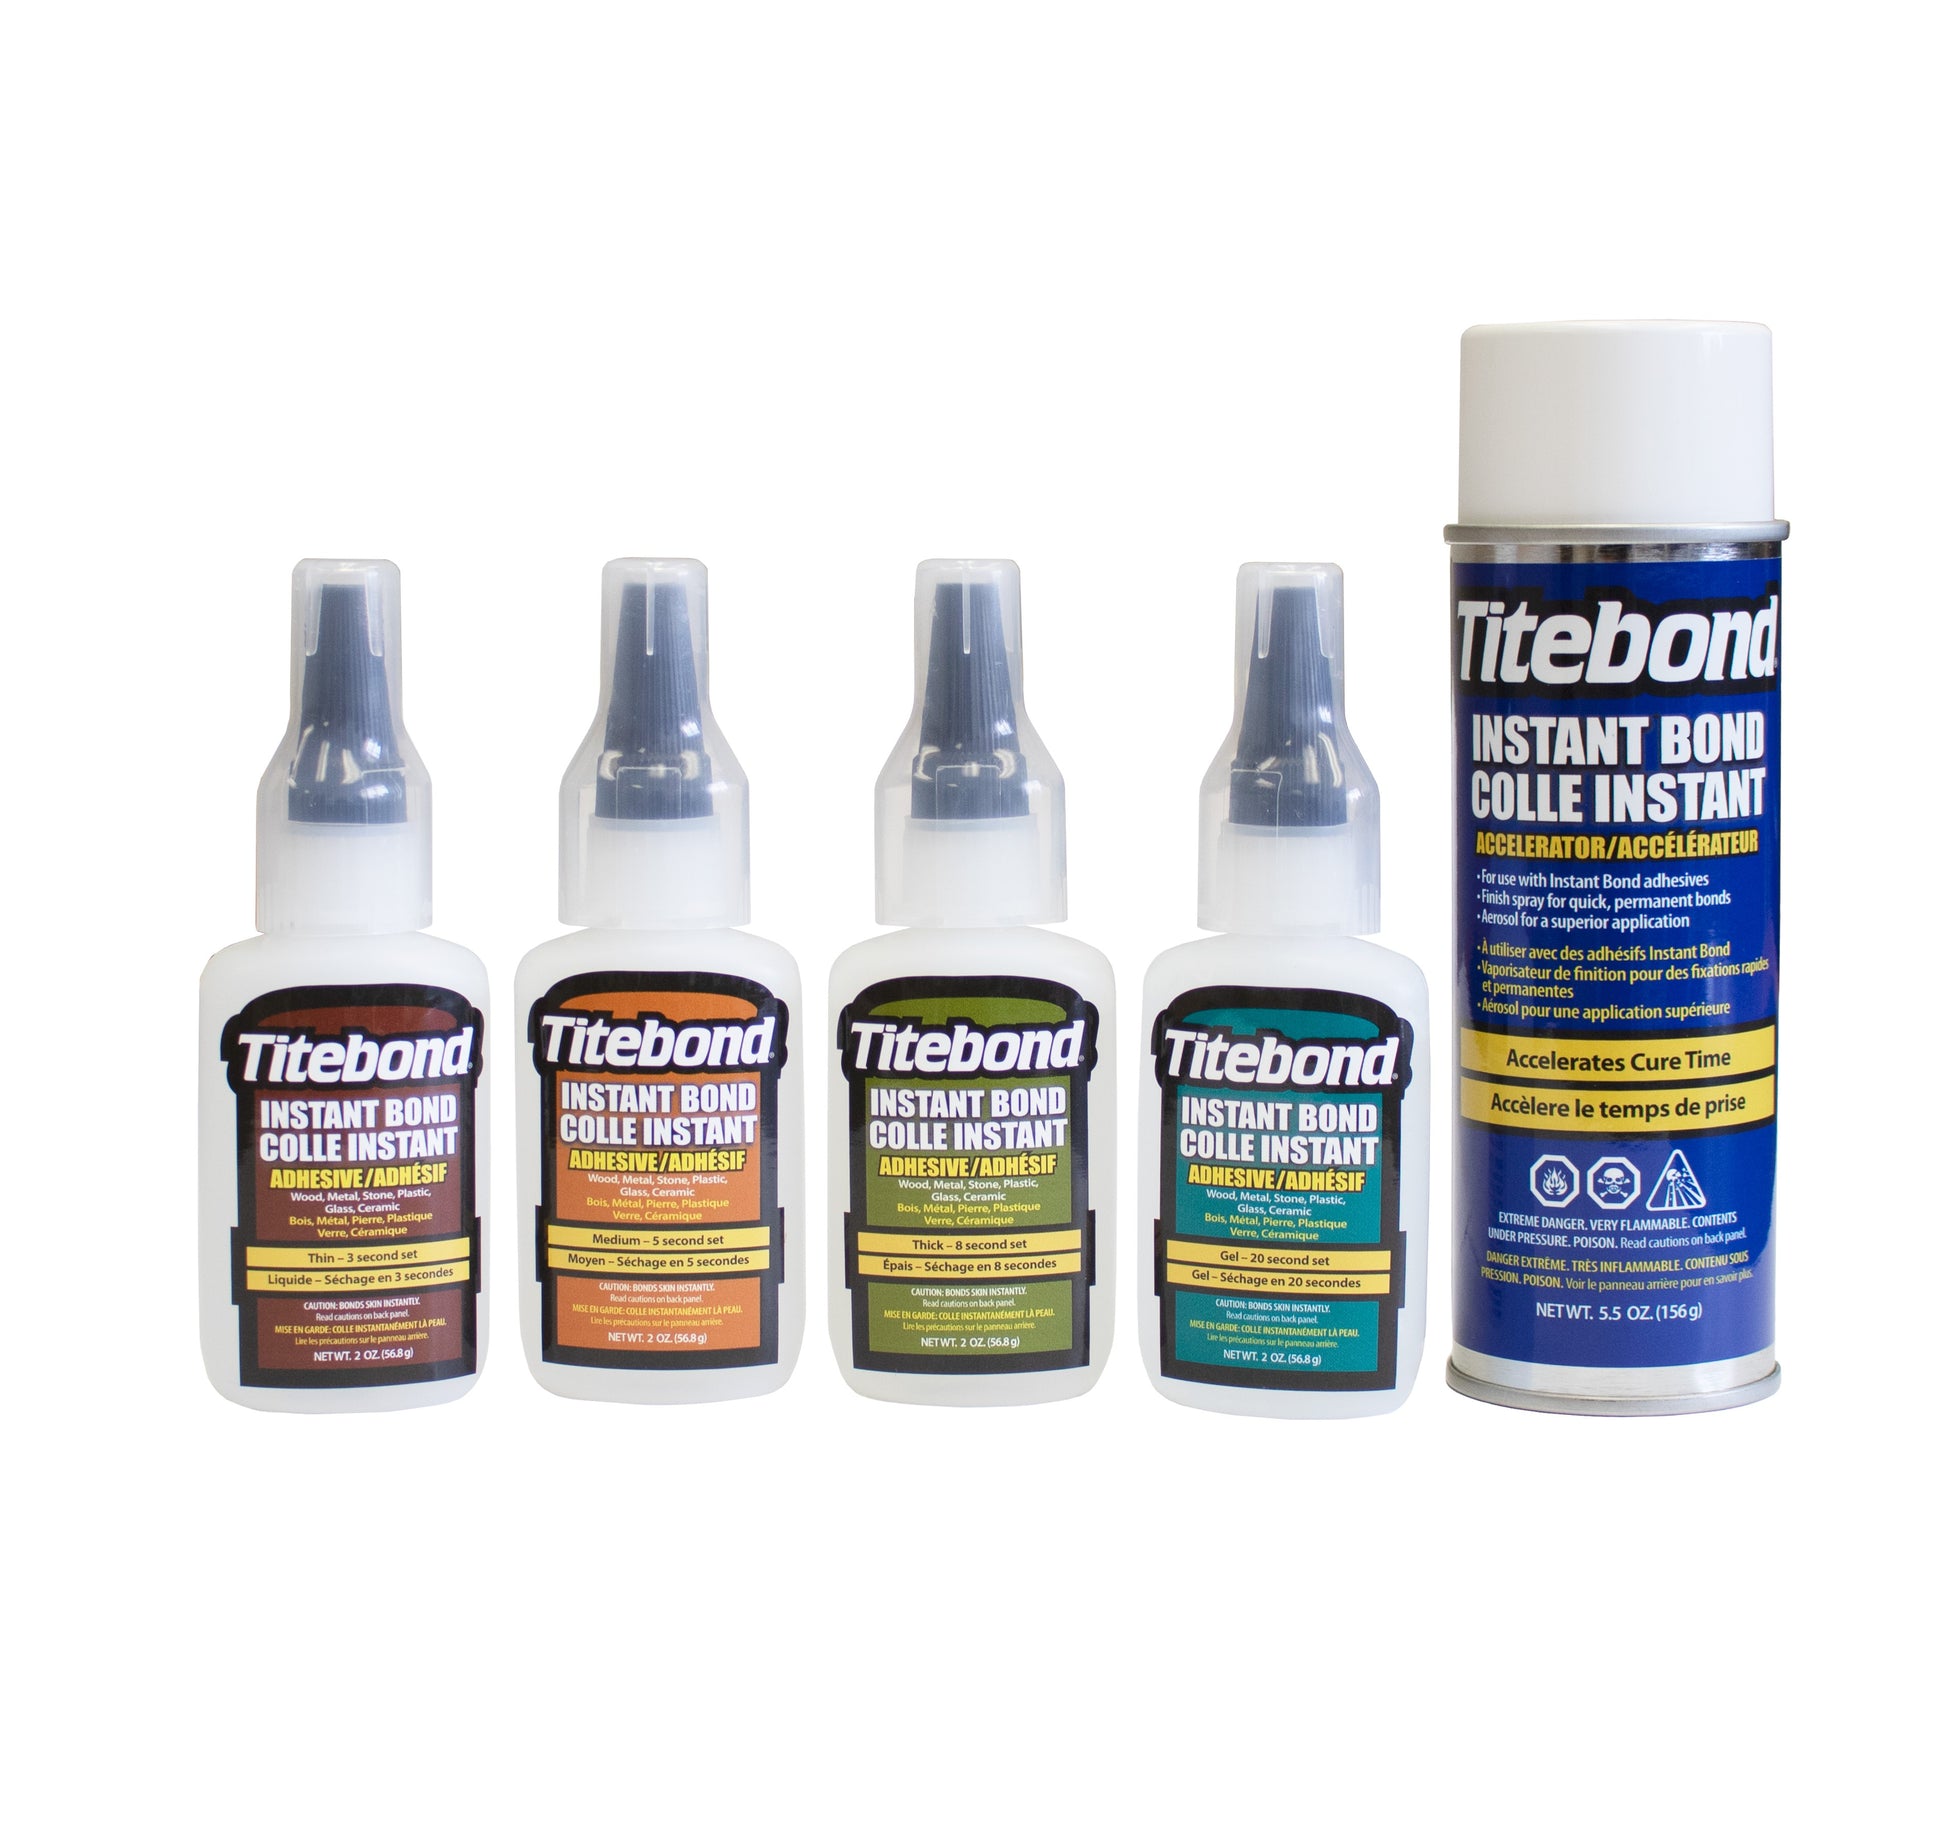 Titebond III Ultimate Wood Glue – A&M Wood Specialty